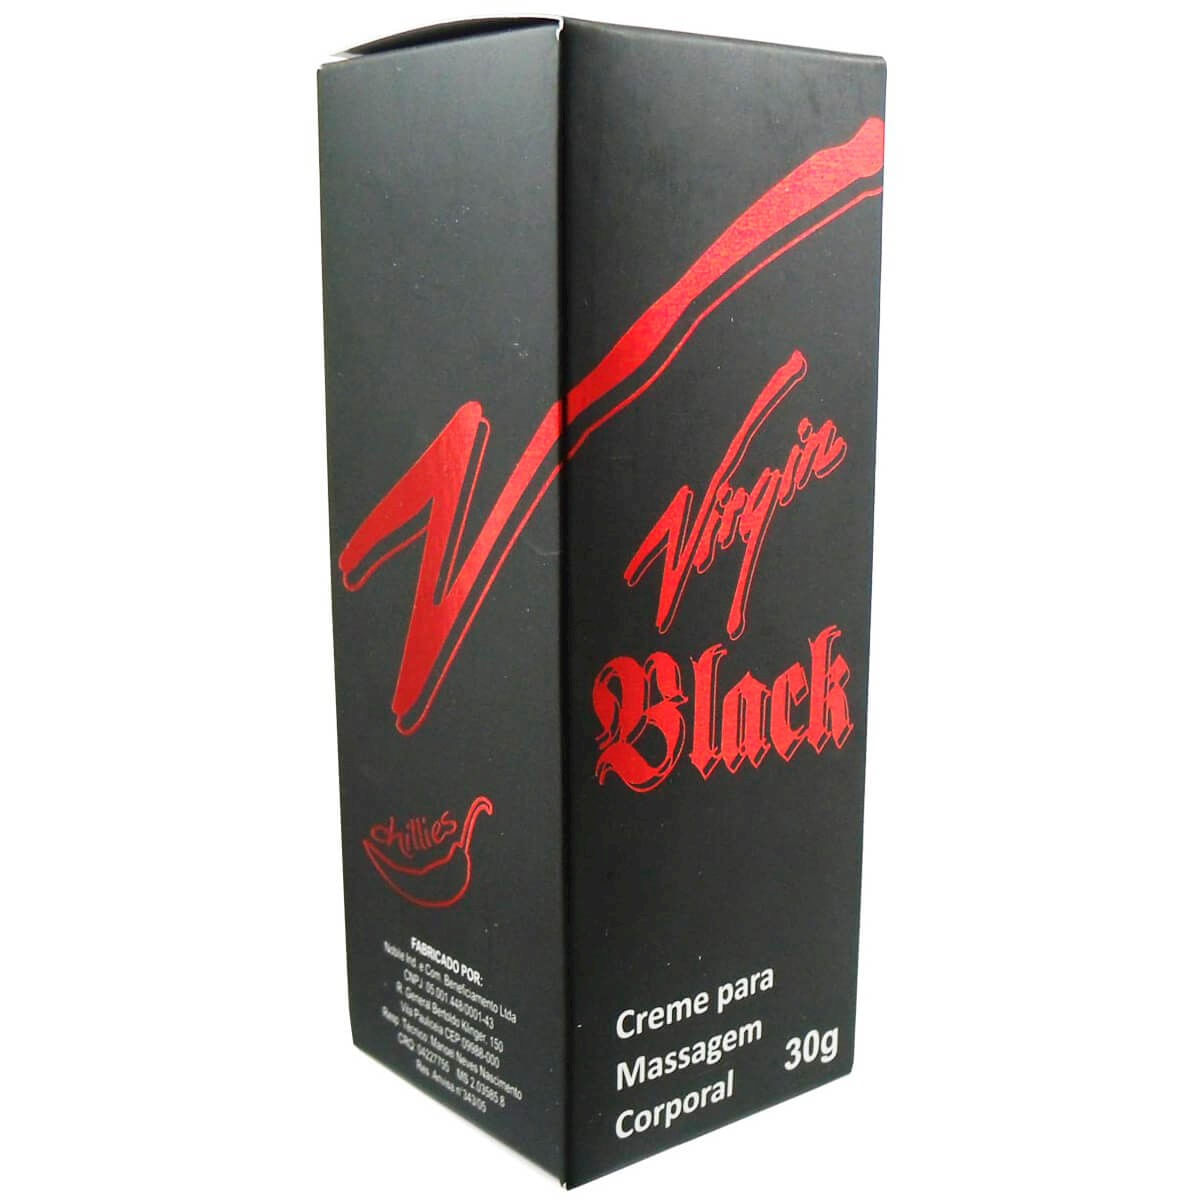 Virgin Black Gel Adstringente Corporal 30g Chillies